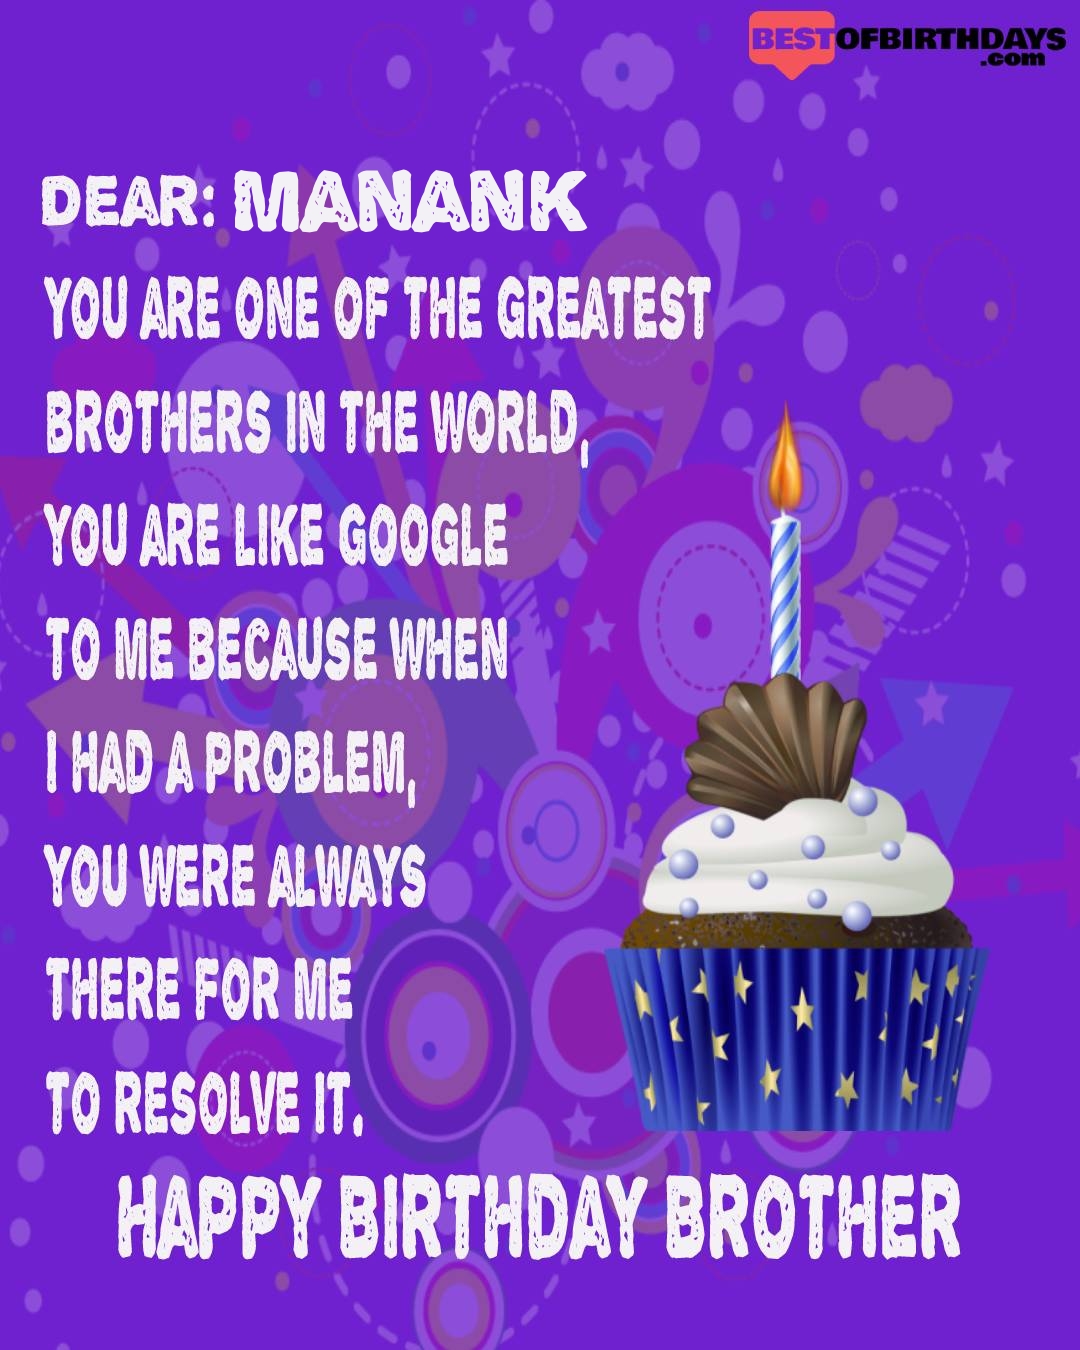 Happy birthday manank bhai brother bro